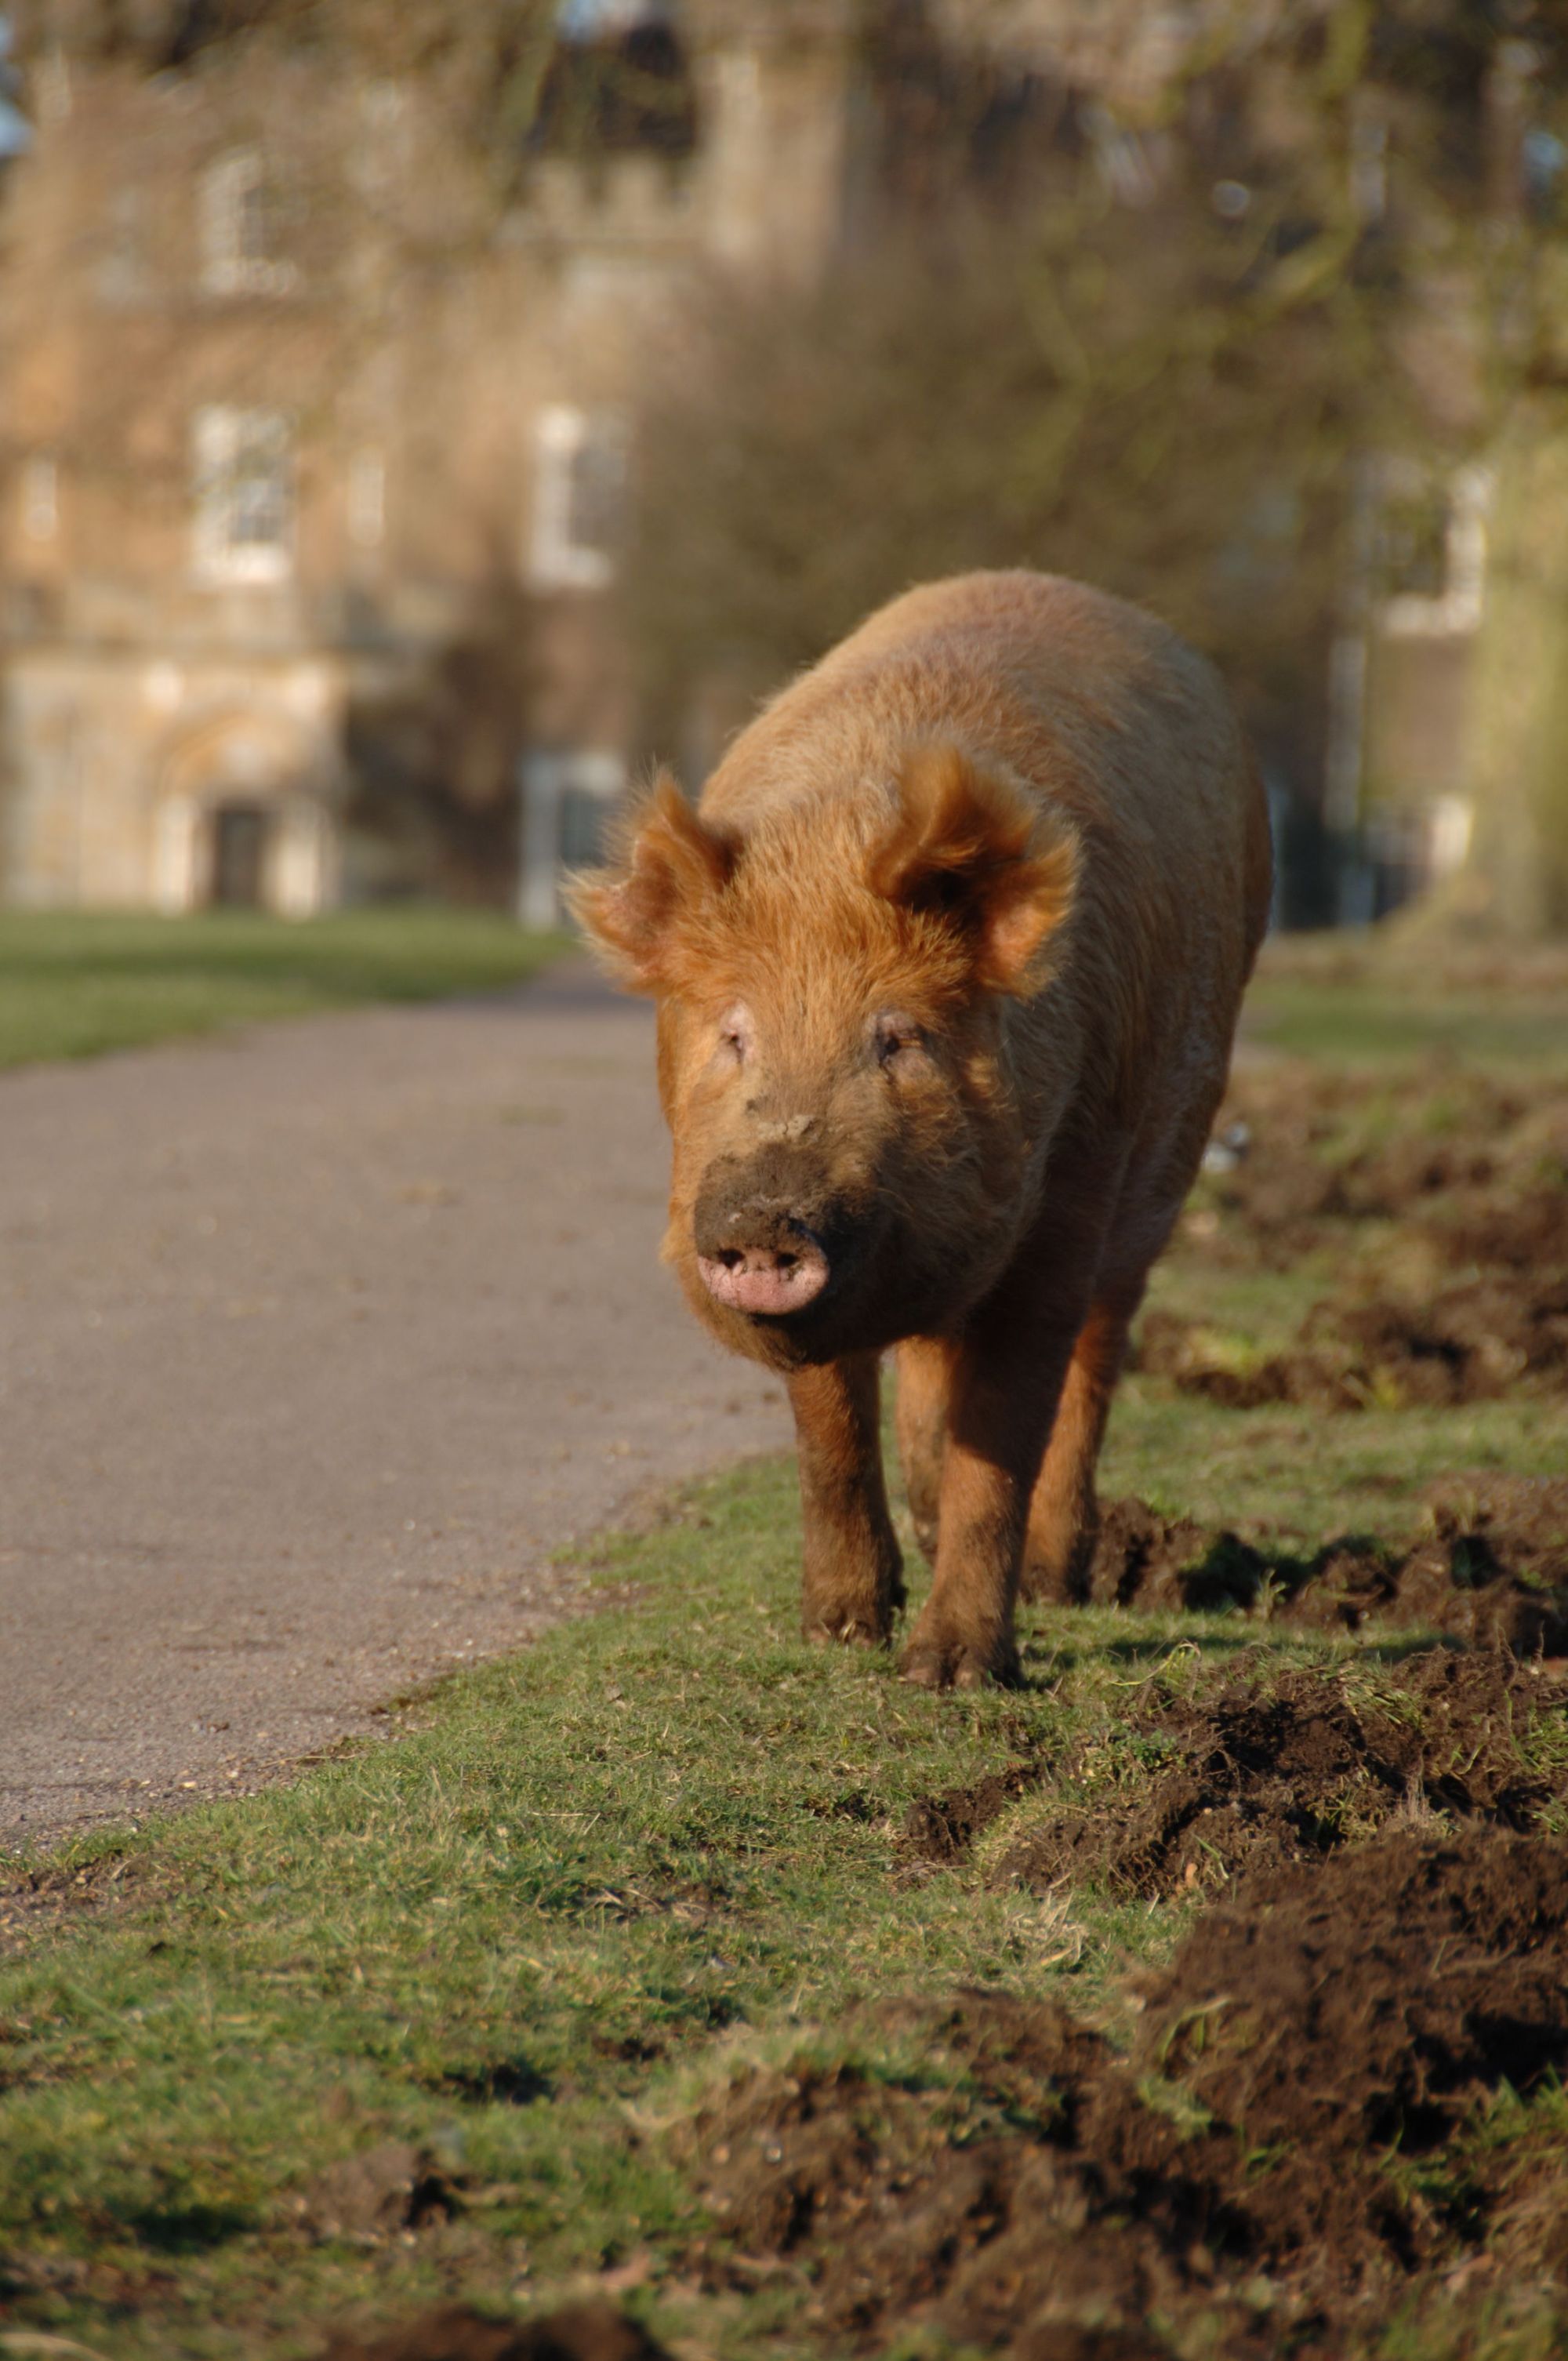 A Tamworth pig on the Knepp Estate